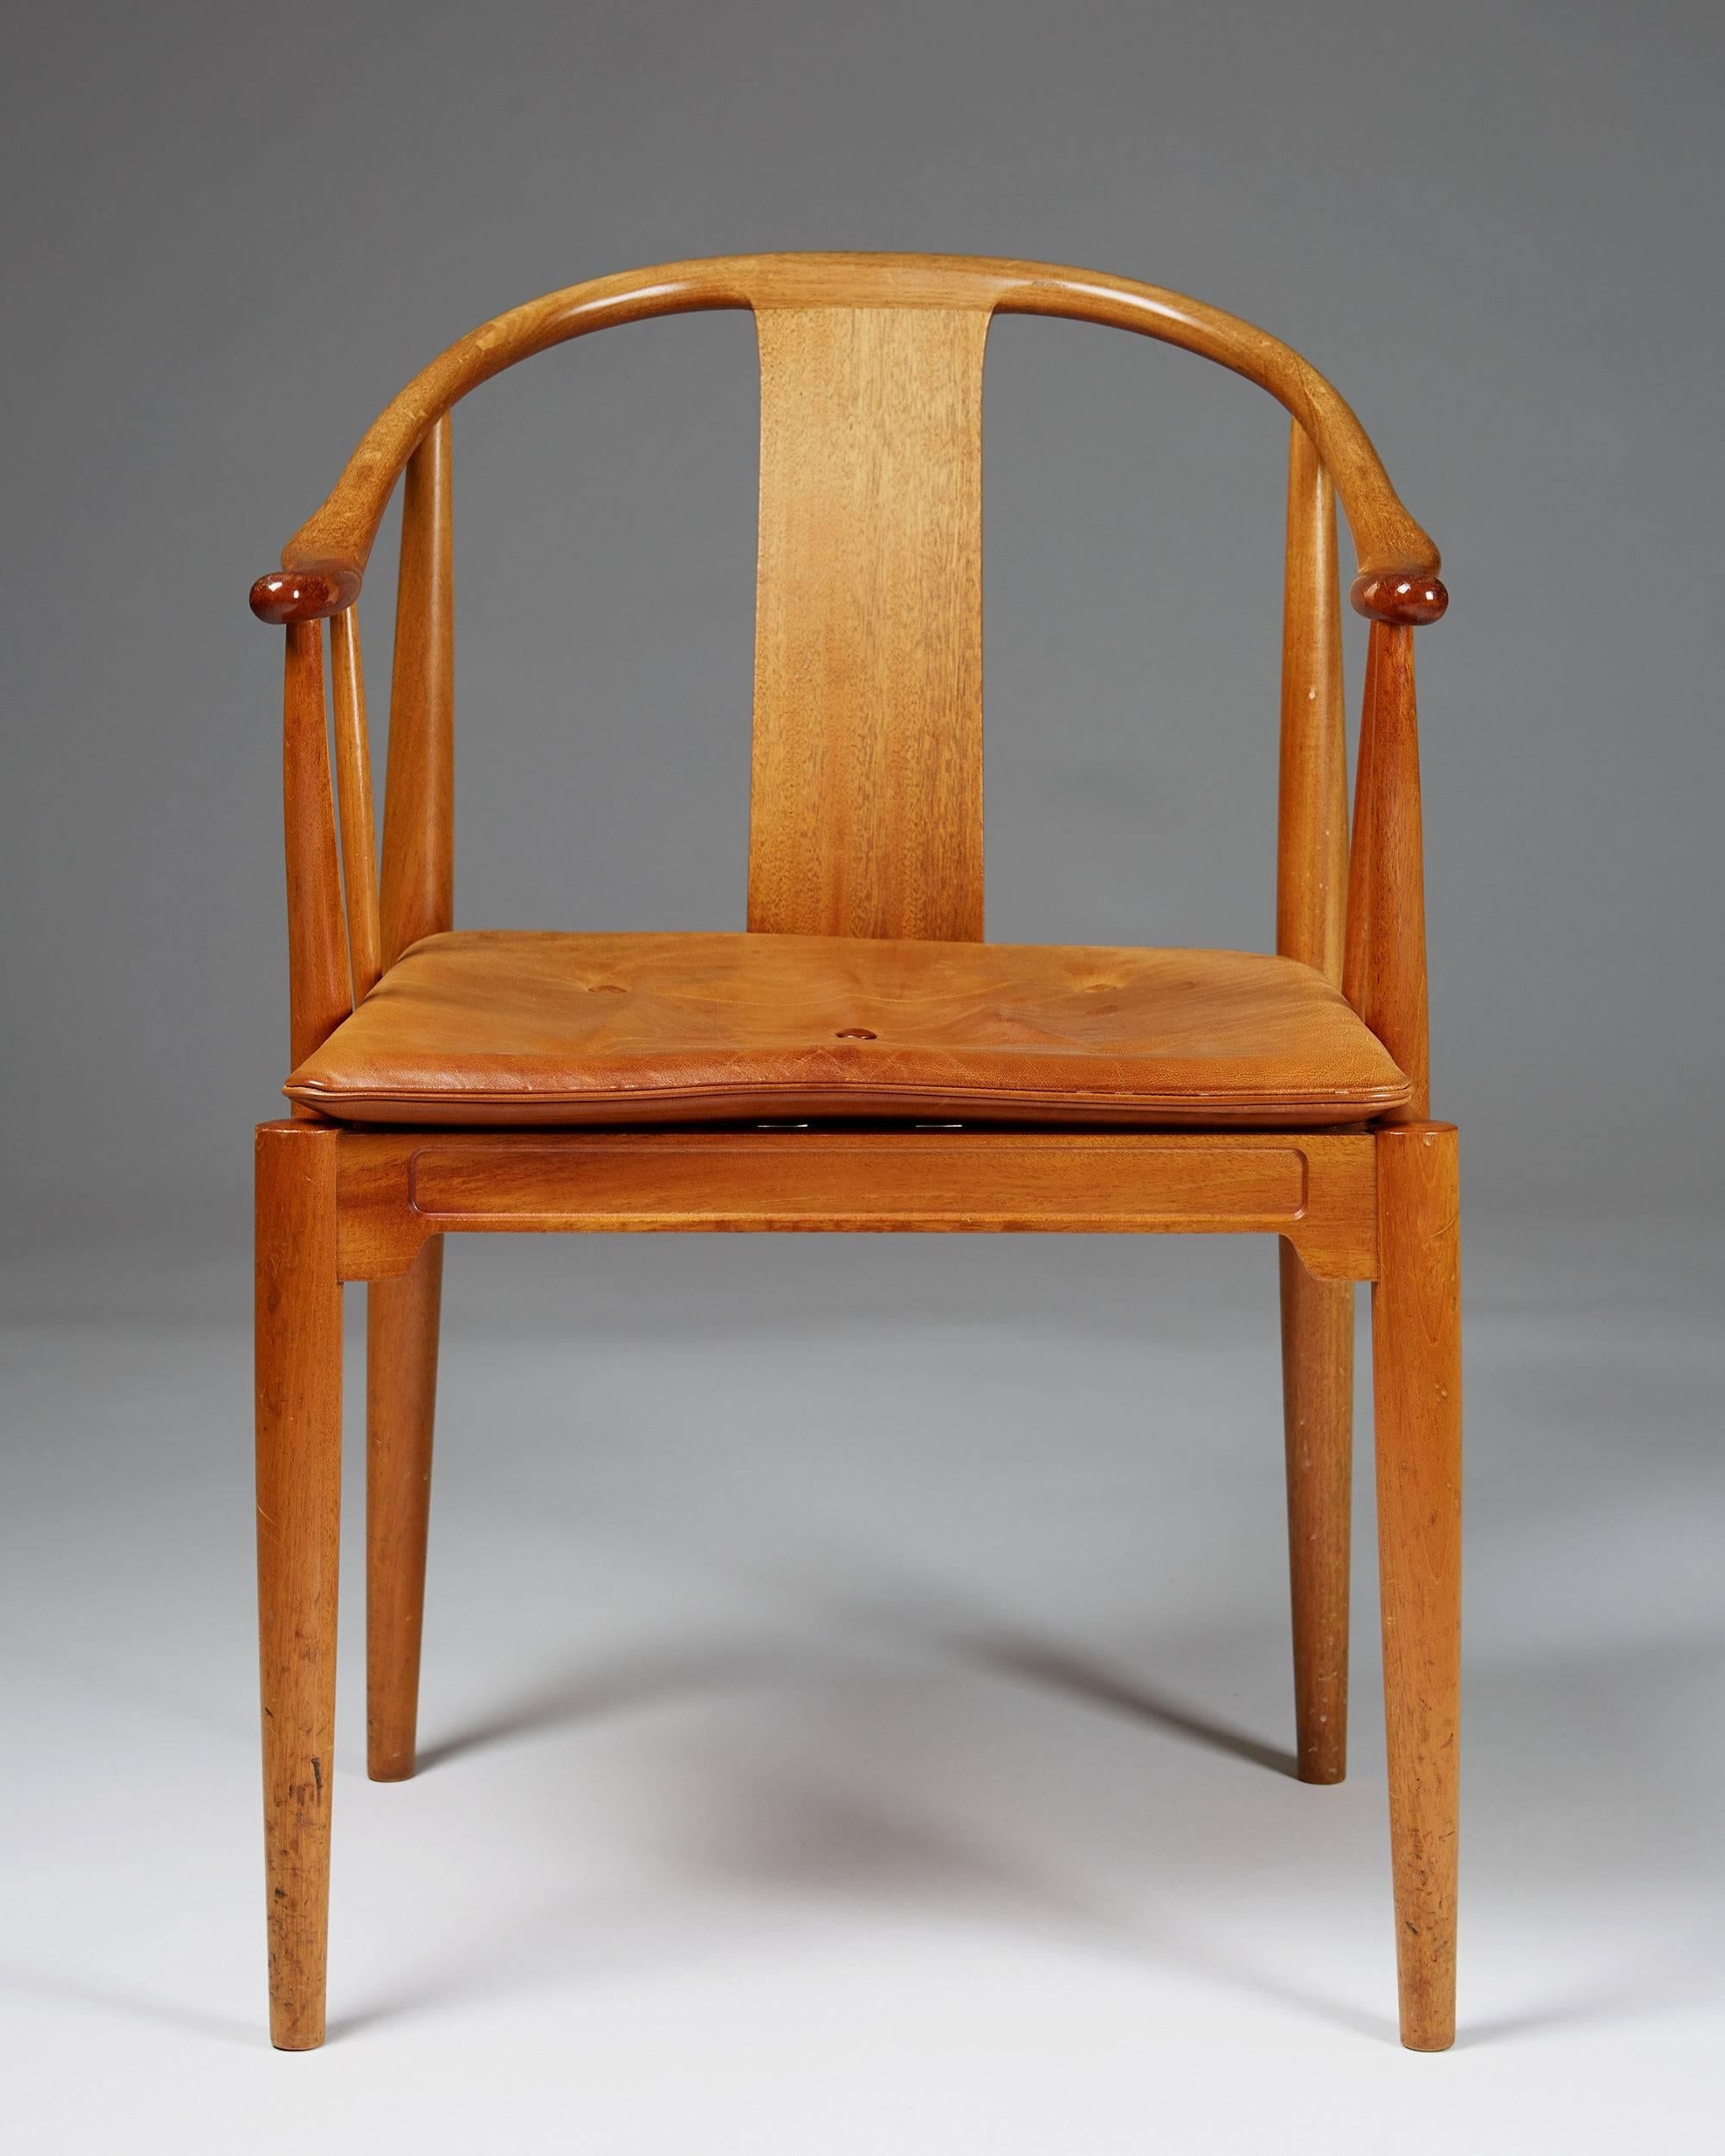 China chair designed by Hans J. Wegner for Fritz Hansen, Denmark, 1980s.
Mahogany and leather.

Measures: H 81 cm/ 32''
W 57,5 cm/ 22 3/4''
D 52 cm/ 20 1/2''